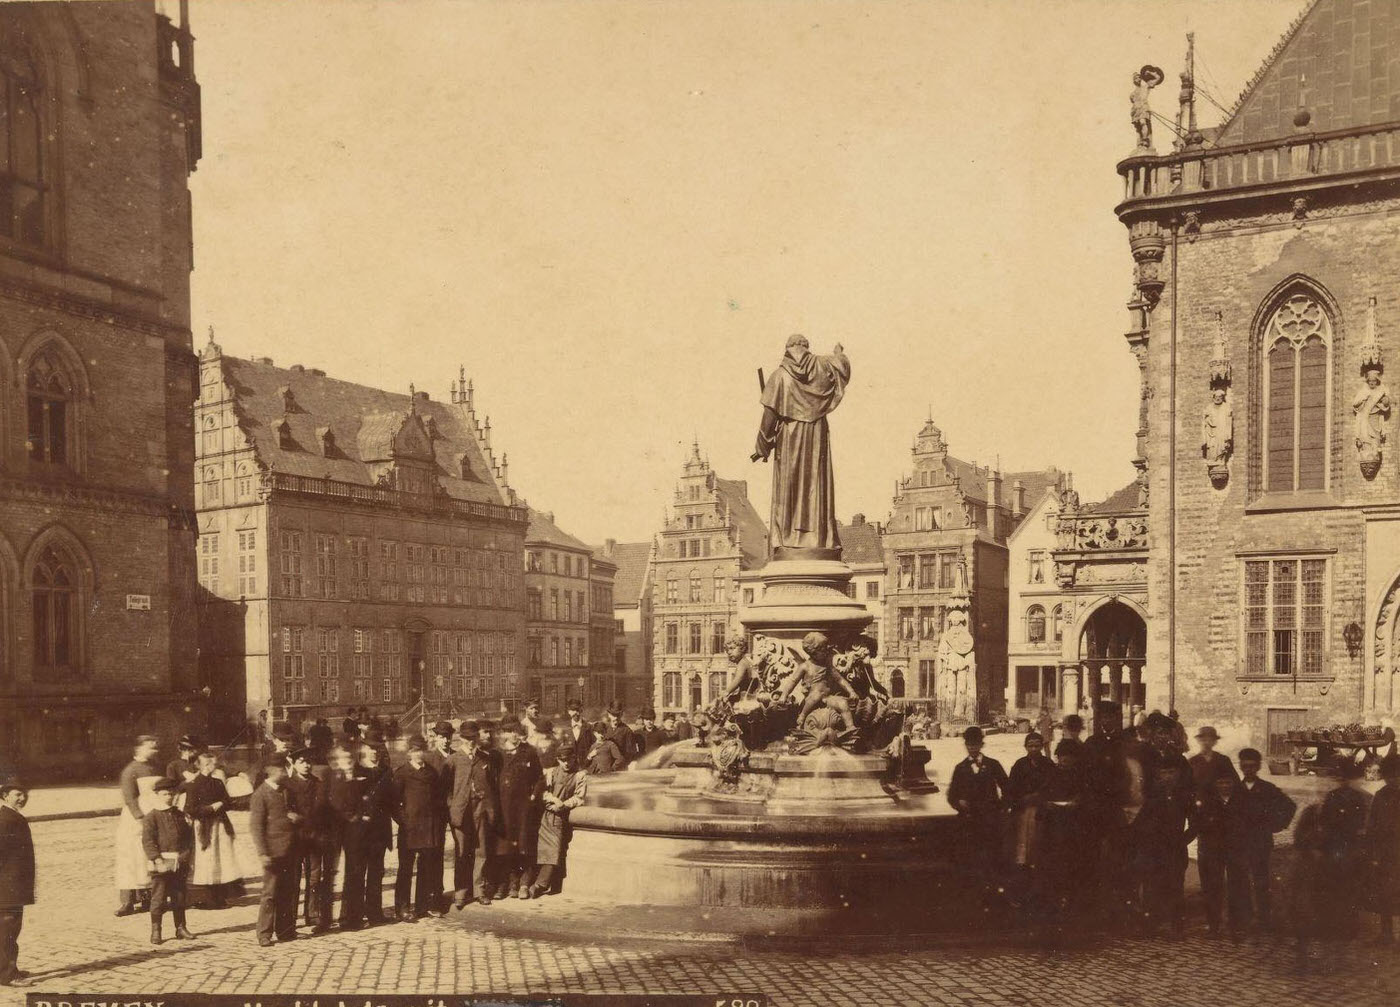 View of Bremer Marktplatz with historical figures, Louis Koch, 1880